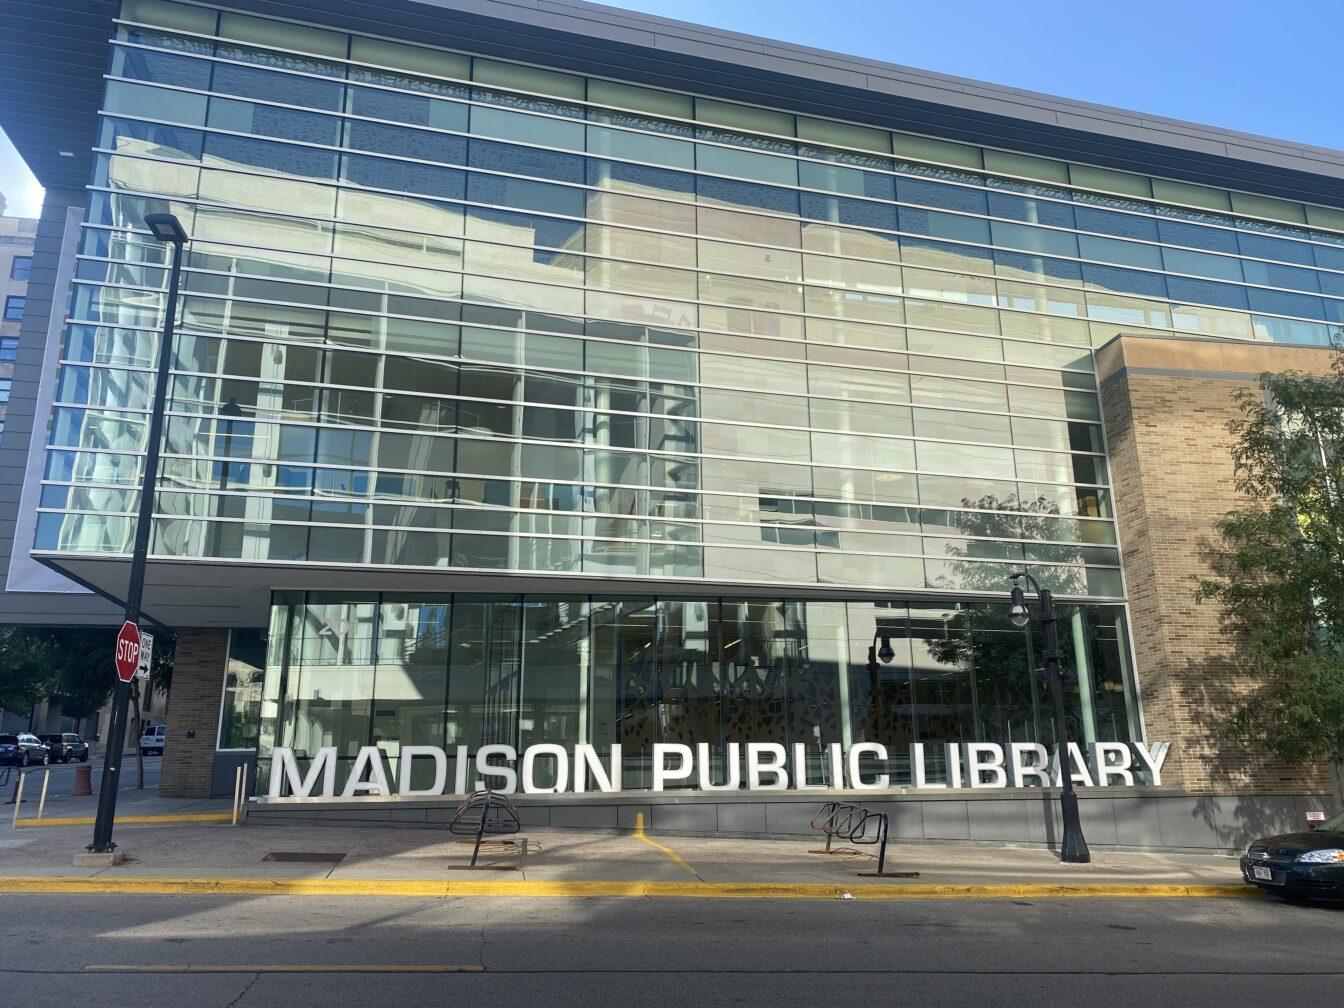 Madison Public Library